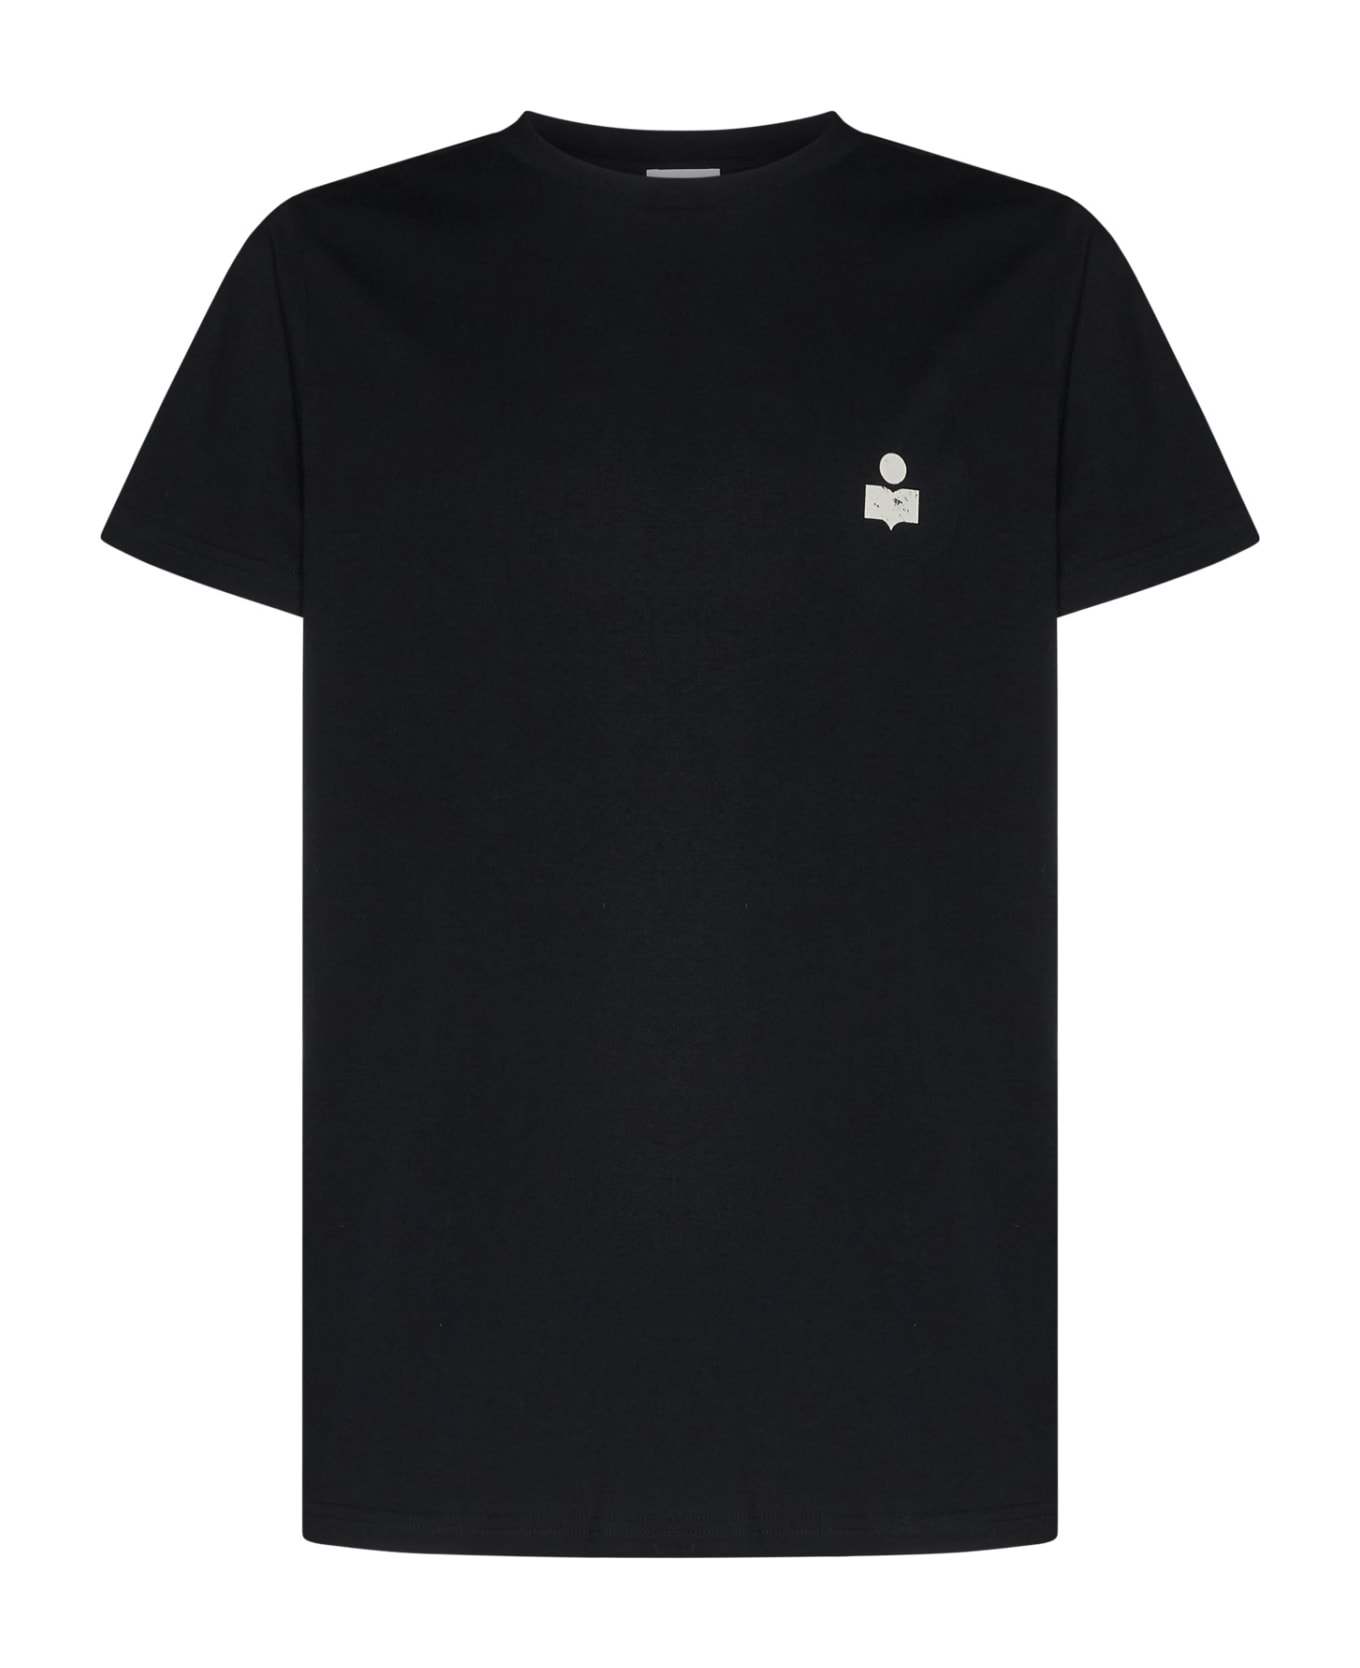 Isabel Marant Zafferh T-shirt - Black/ecru